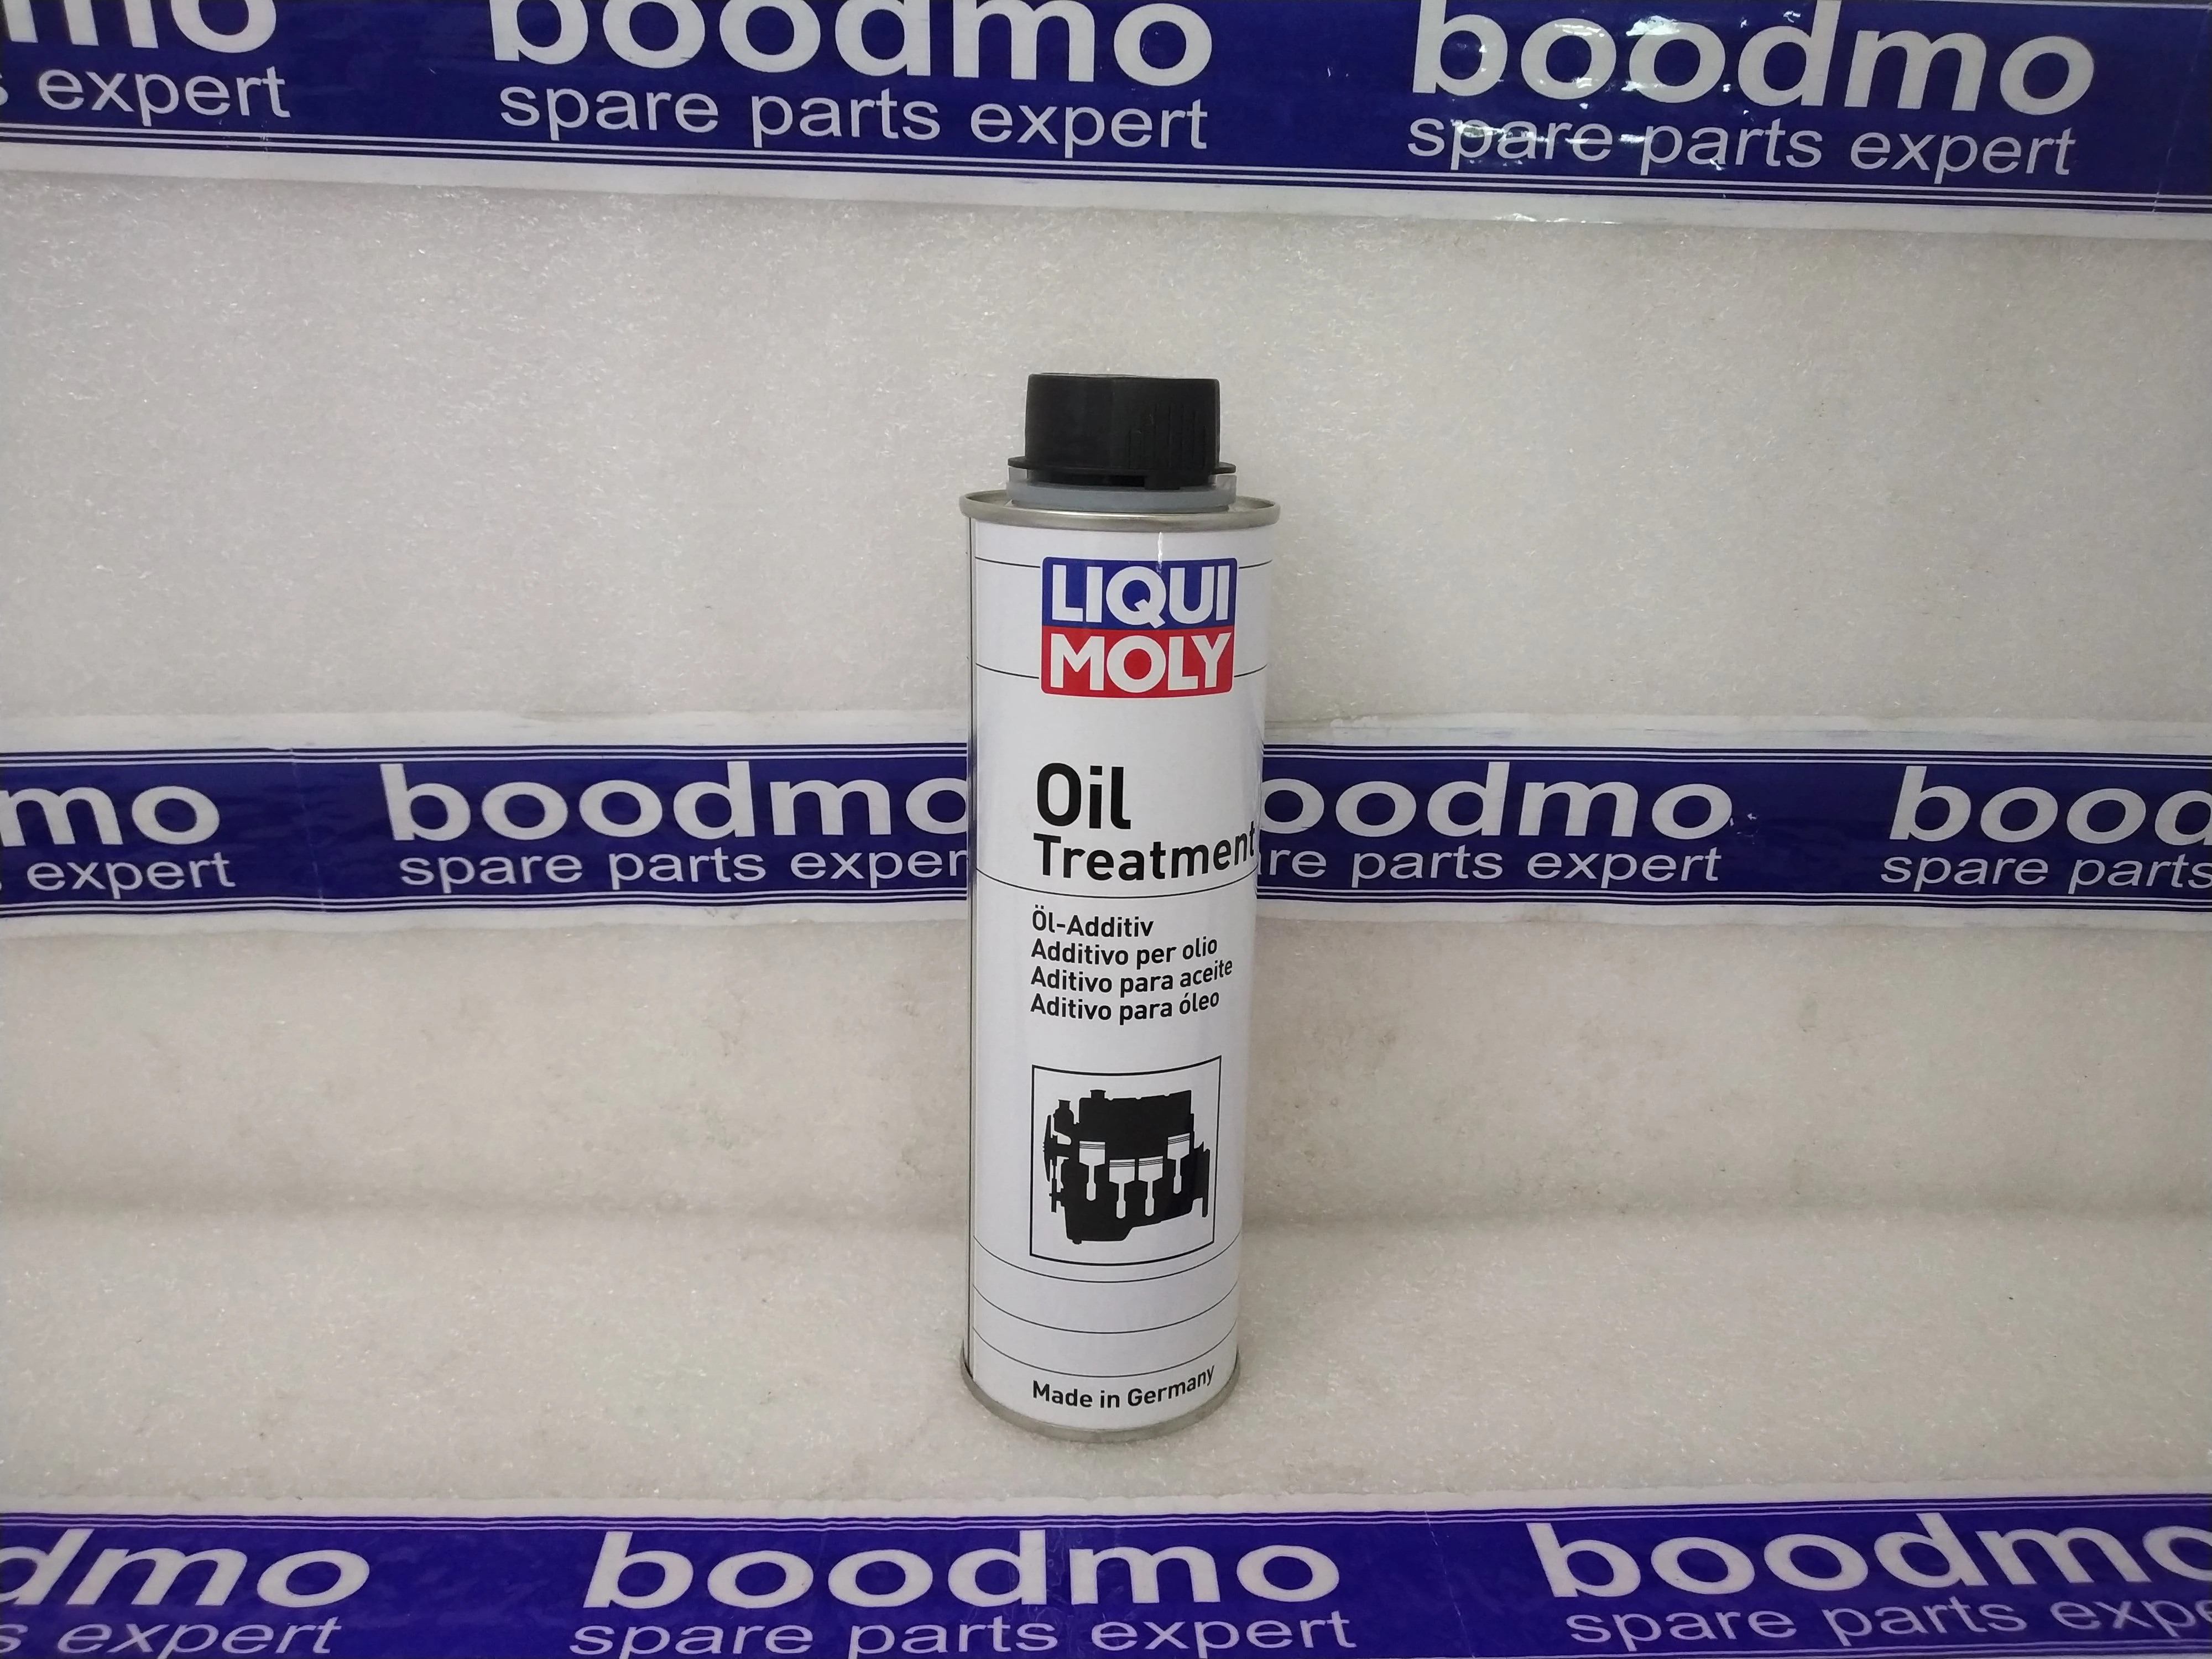 Oil Treatment (300 ml): Liqui Moly 2587 -compatibility, features,  prices. boodmo